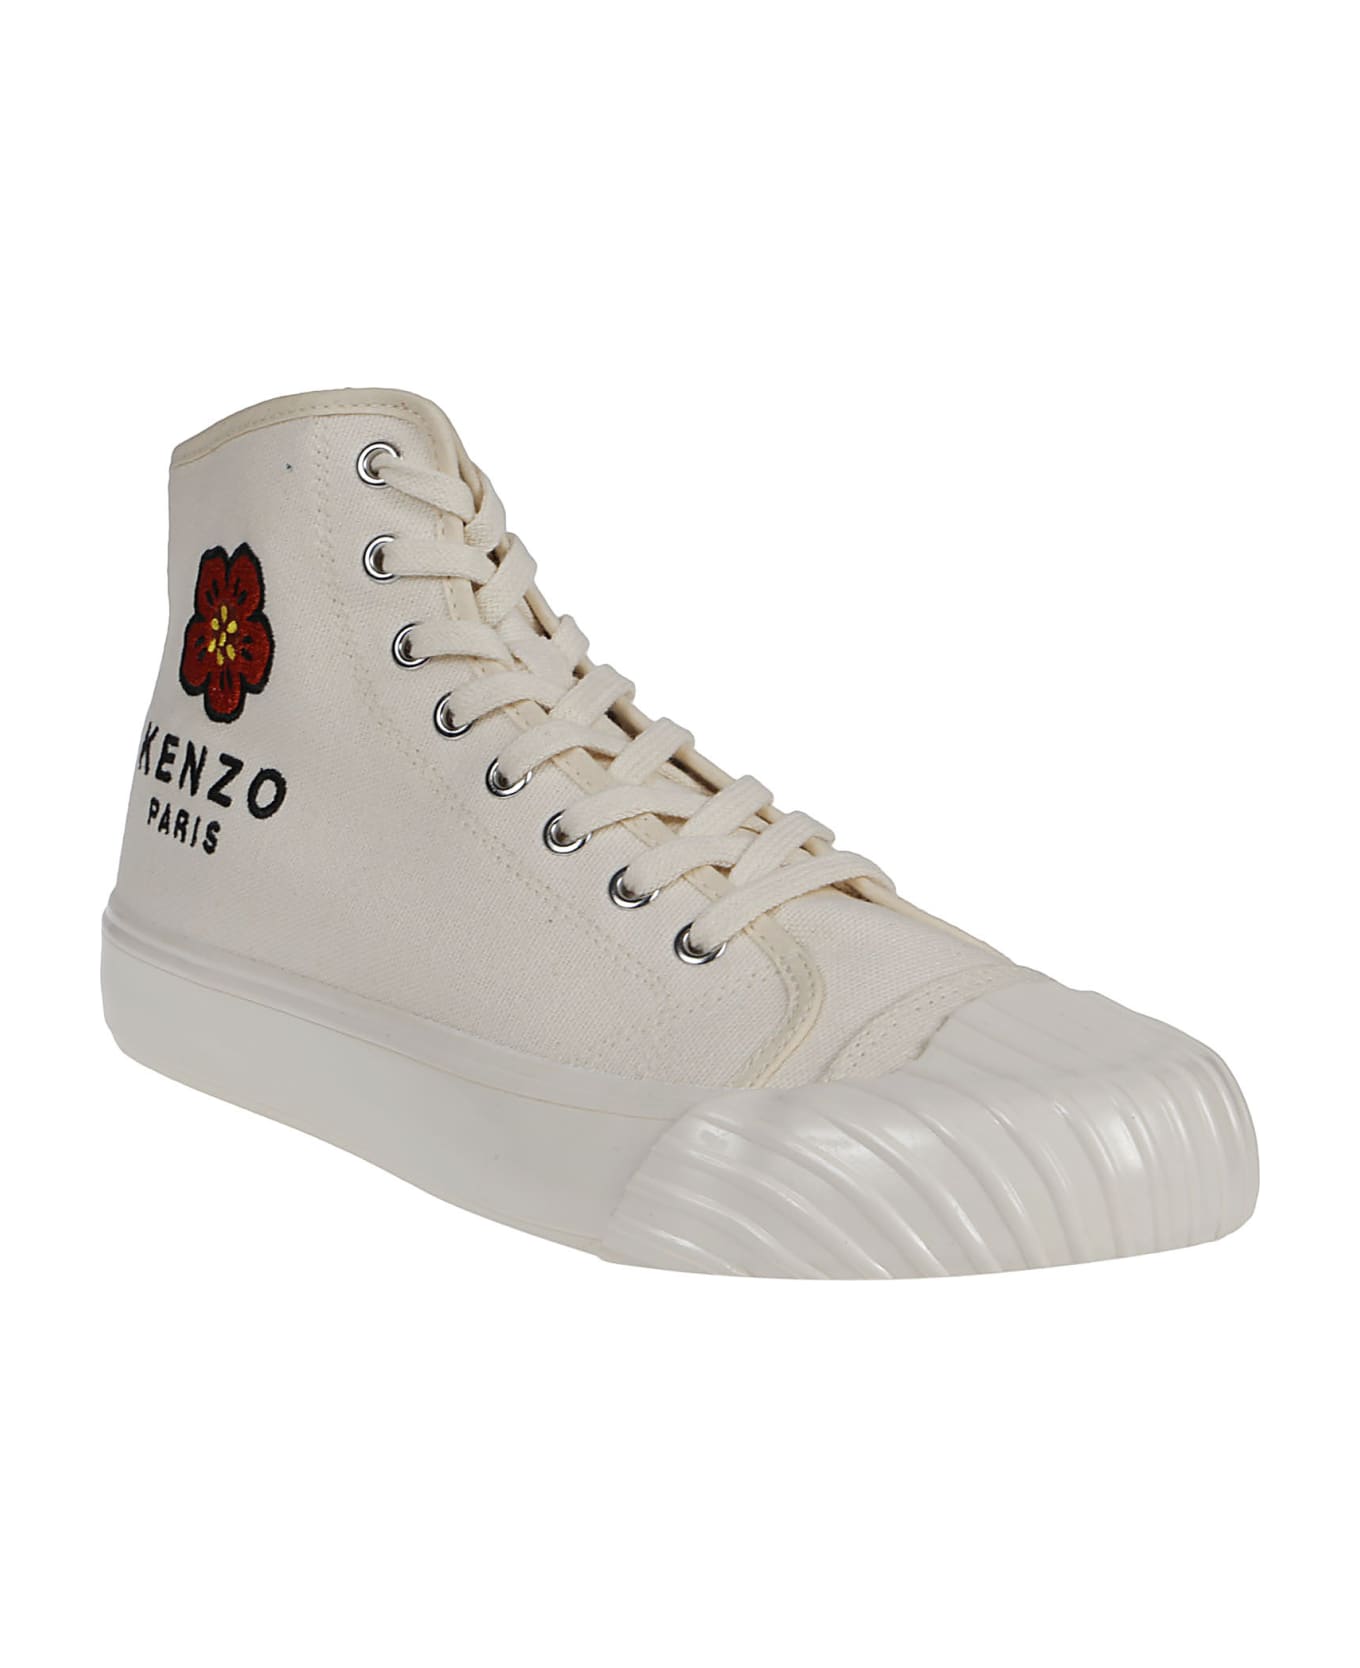 Kenzo school High Top Sneakers - Creme